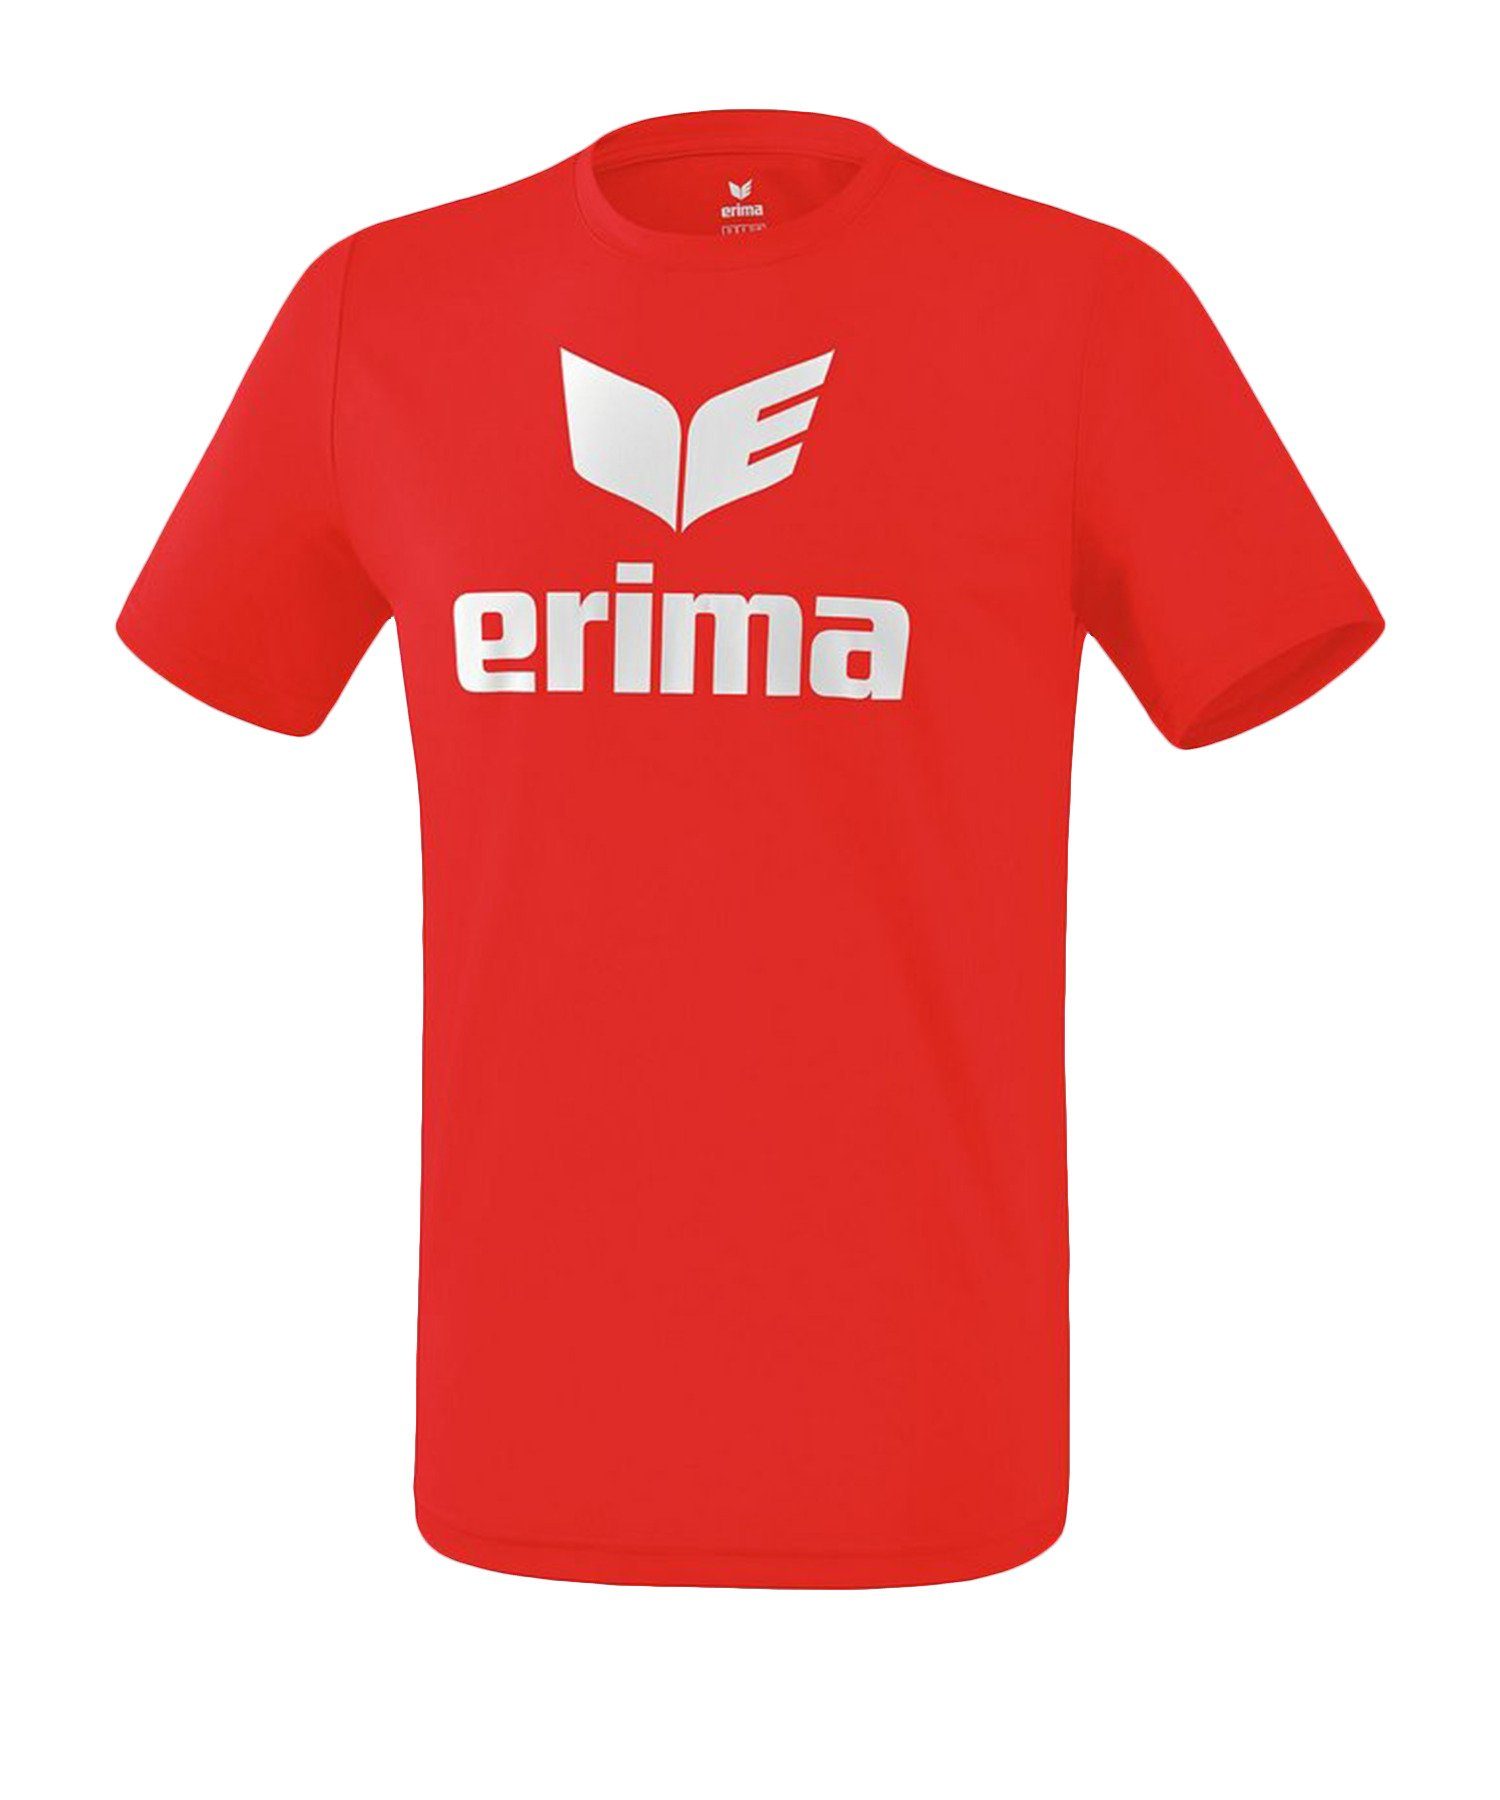 Erima T-Shirt Funktions Promo T-Shirt default RotWeiss